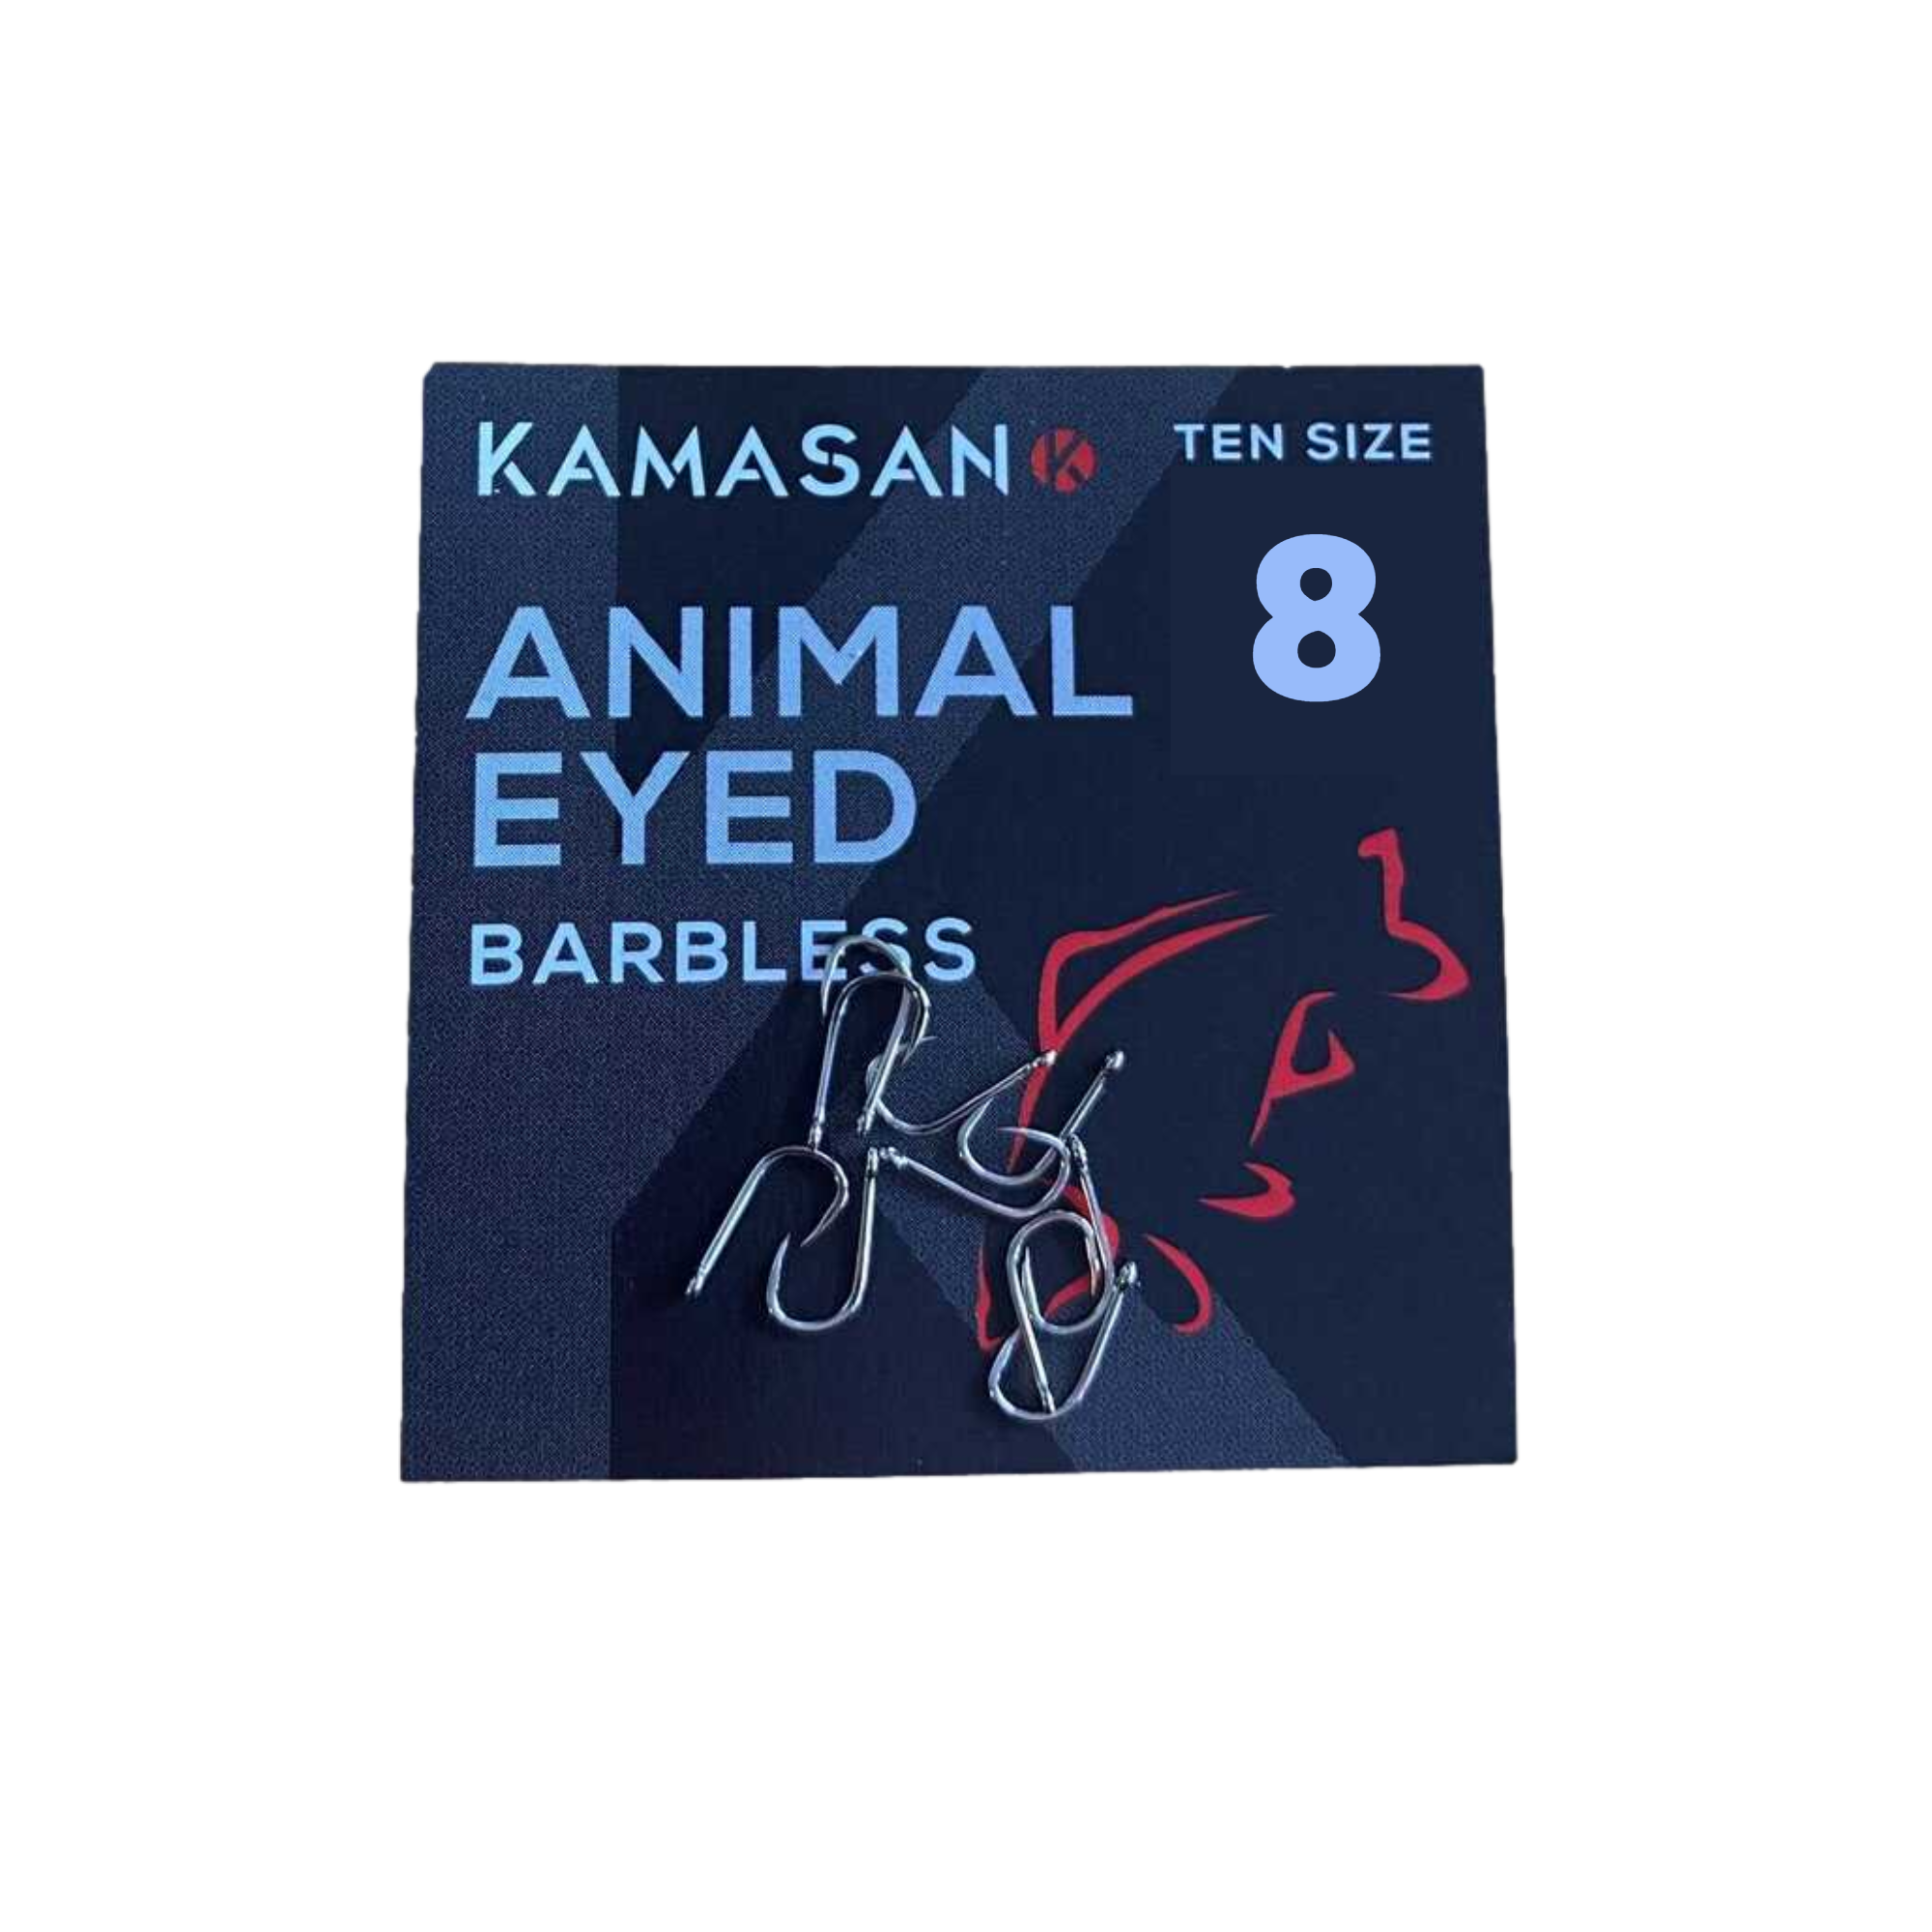 ALL SIZES AVAILABLE KAMASAN ANIMAL EYED BARBLESS HOOKS FREE P&P 